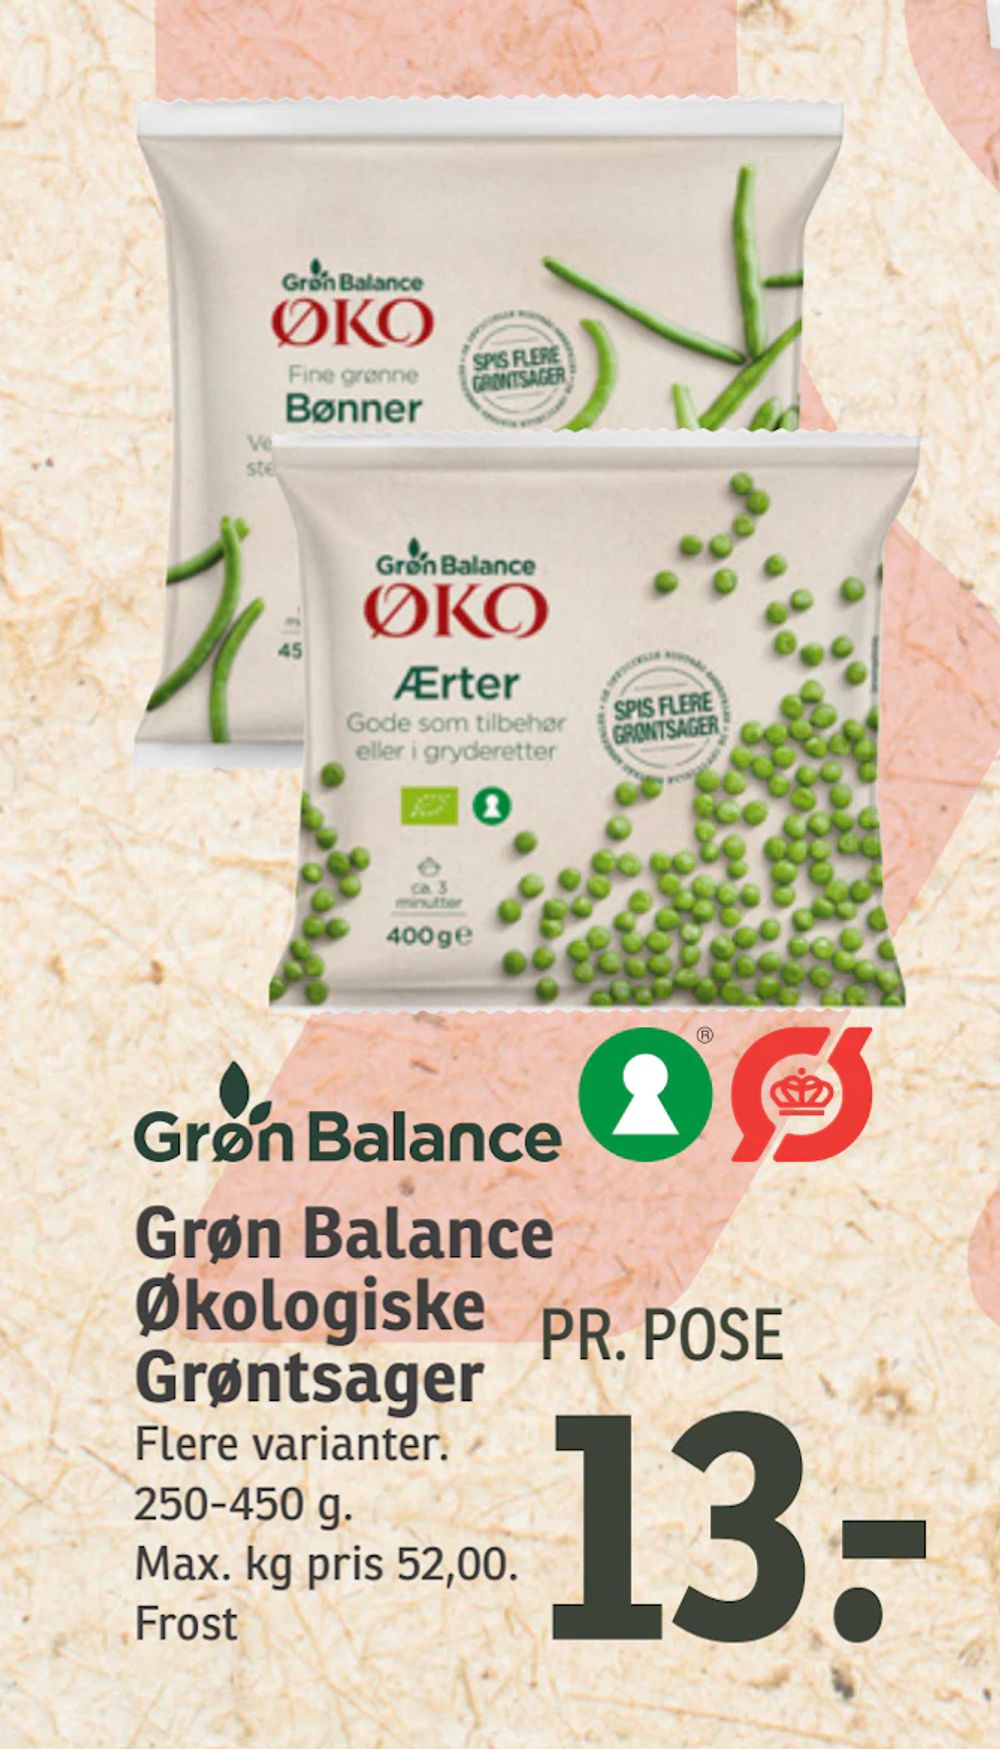 Tilbud på Grøn Balance Økologiske Grøntsager fra SPAR til 13 kr.